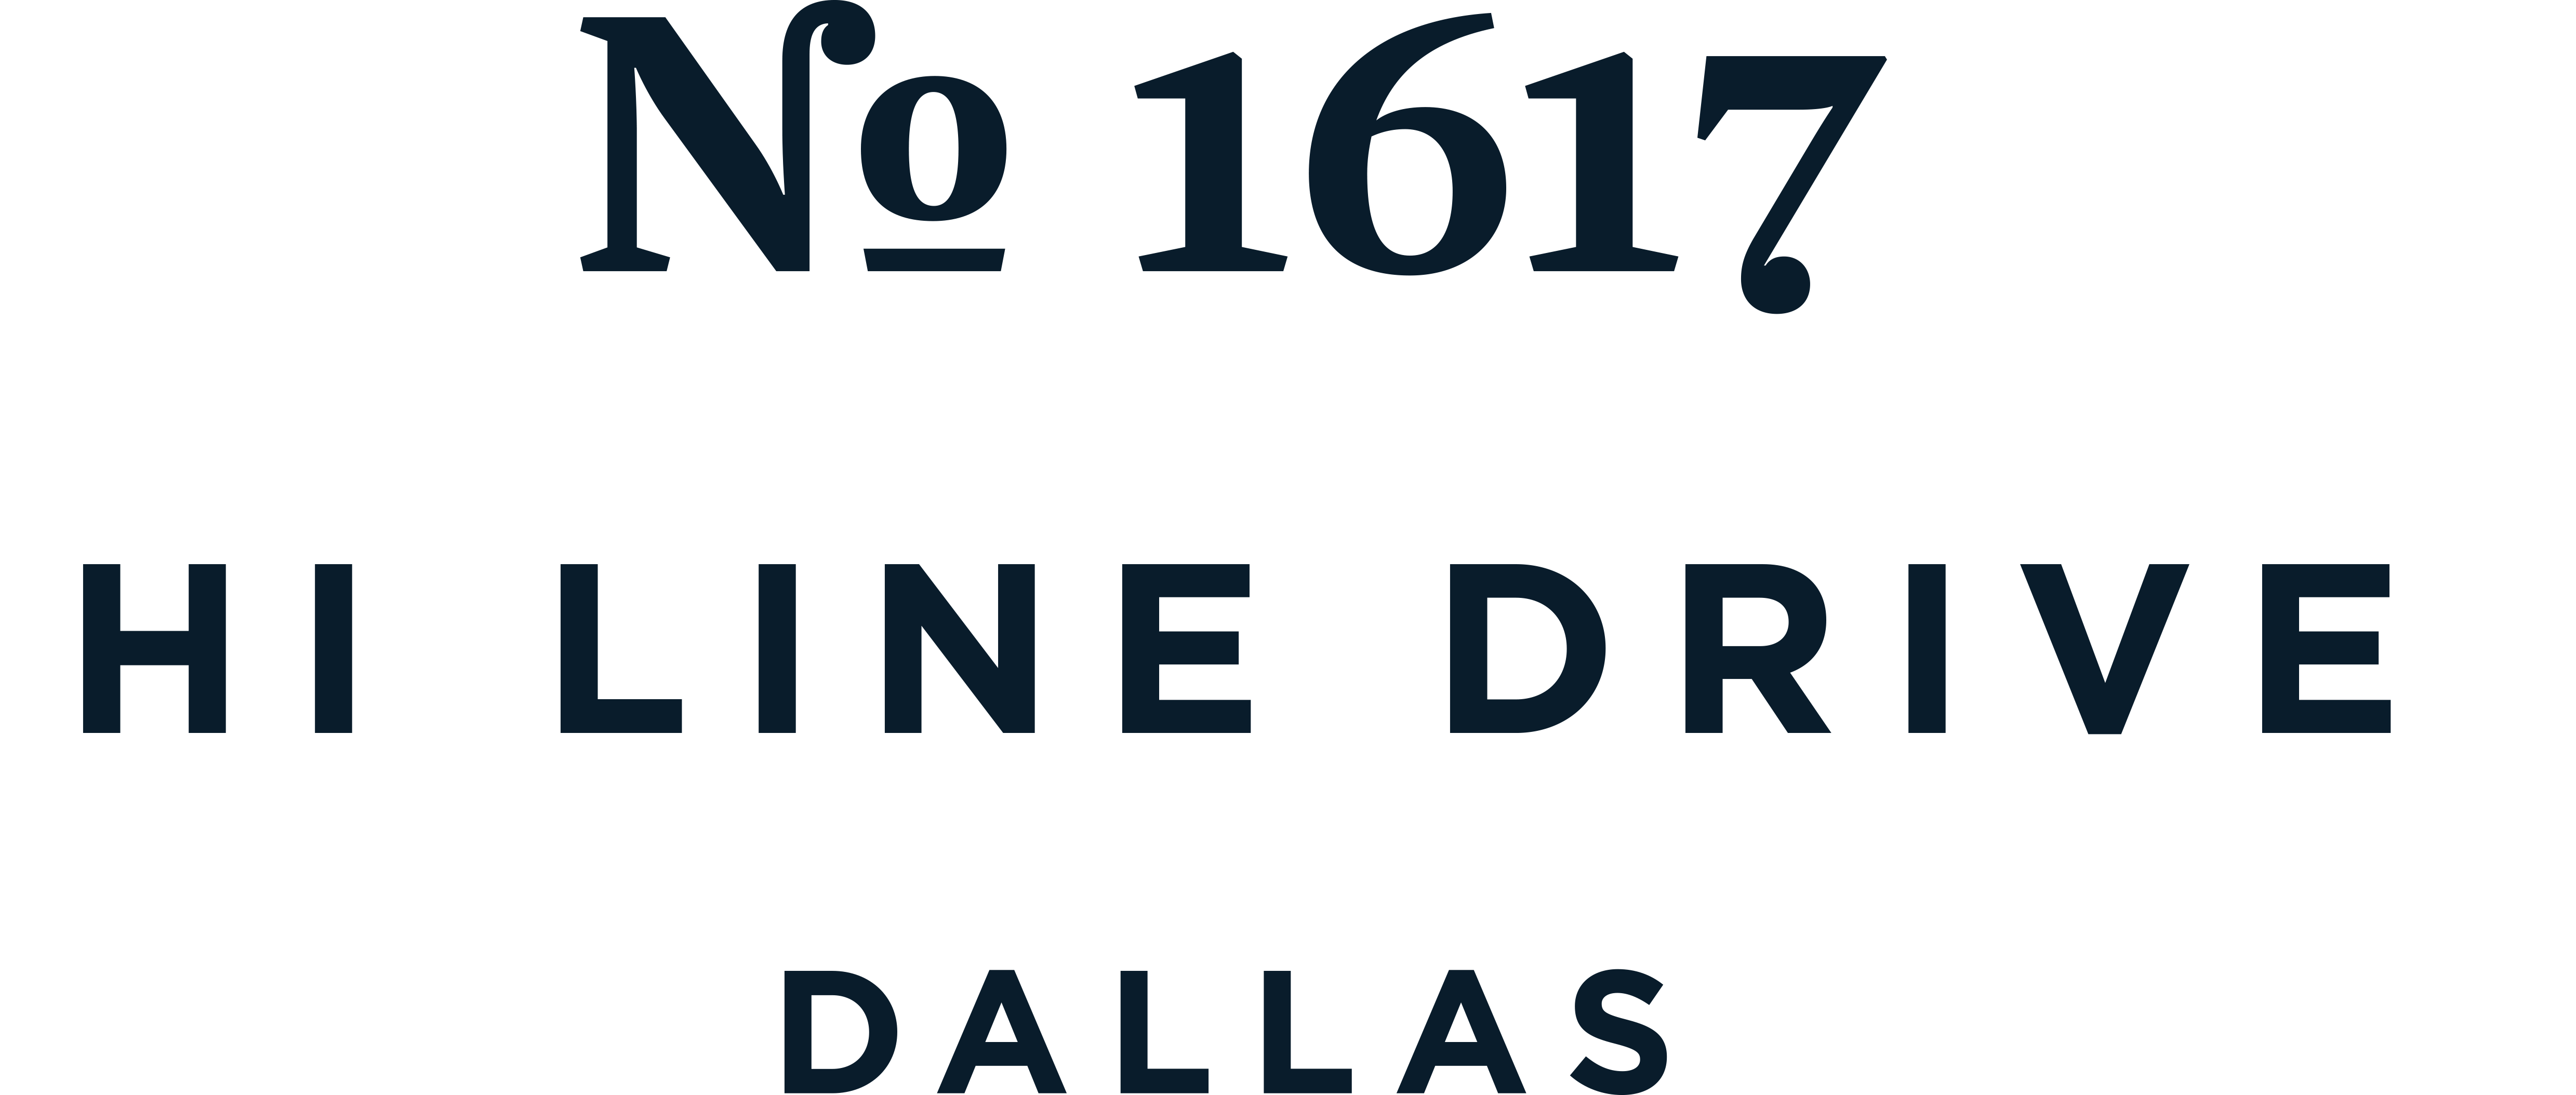 Carbone Dallas address